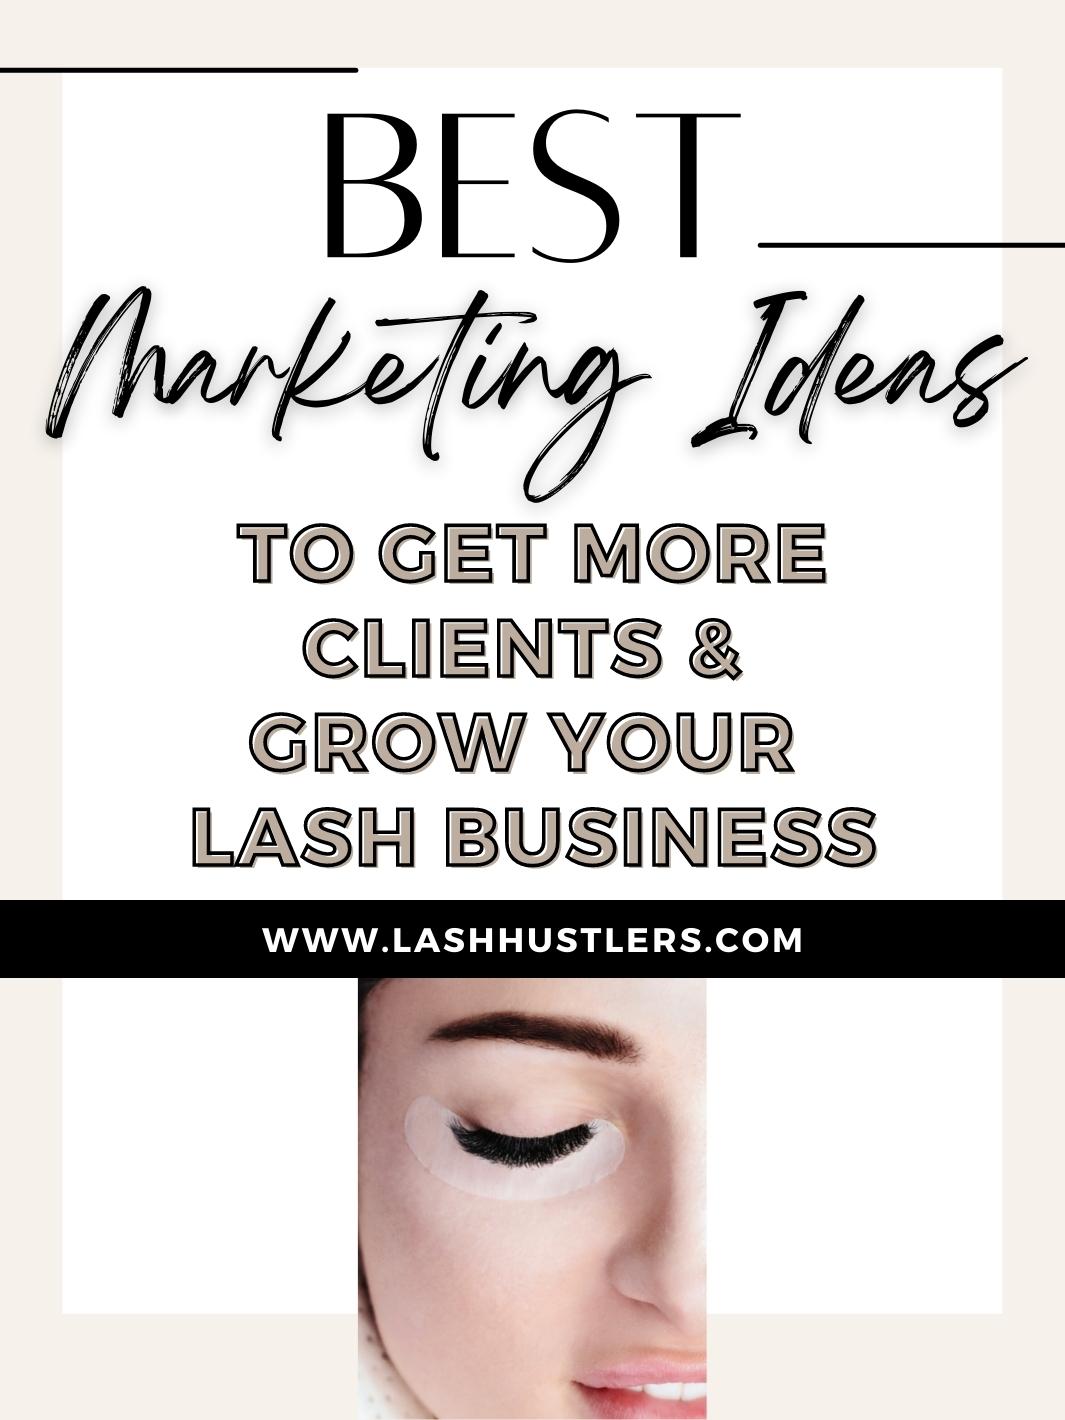 Lash Marketing Ideas To Get More